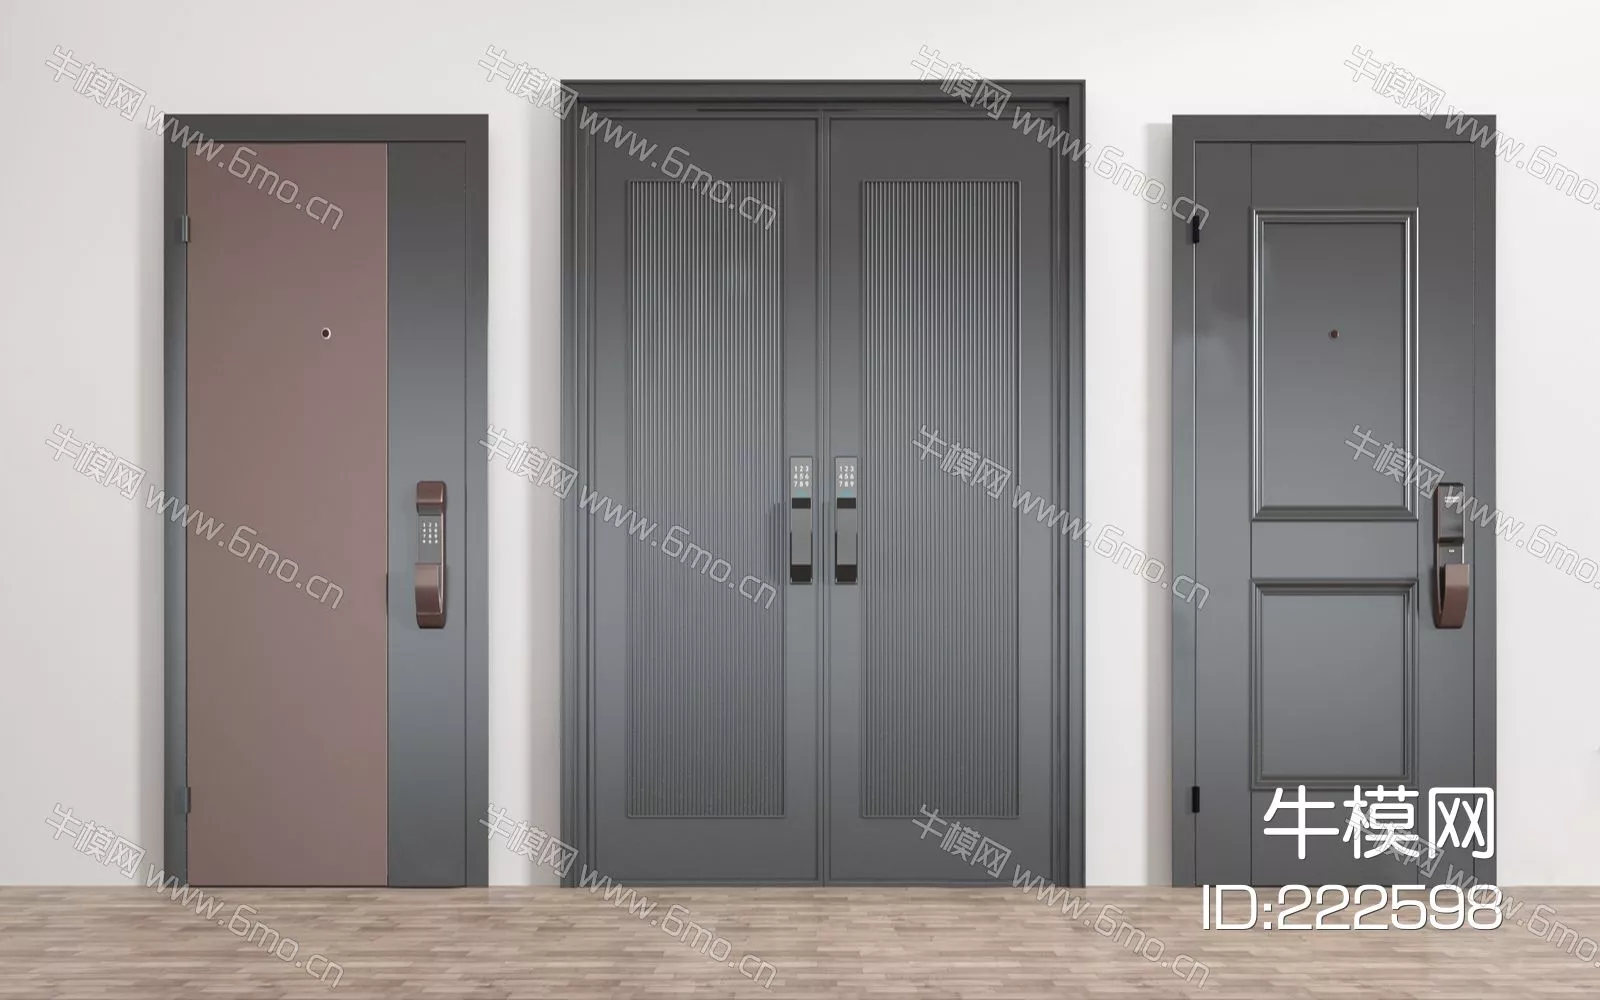 MODERN DOOR AND WINDOWS - SKETCHUP 3D MODEL - ENSCAPE - 222598